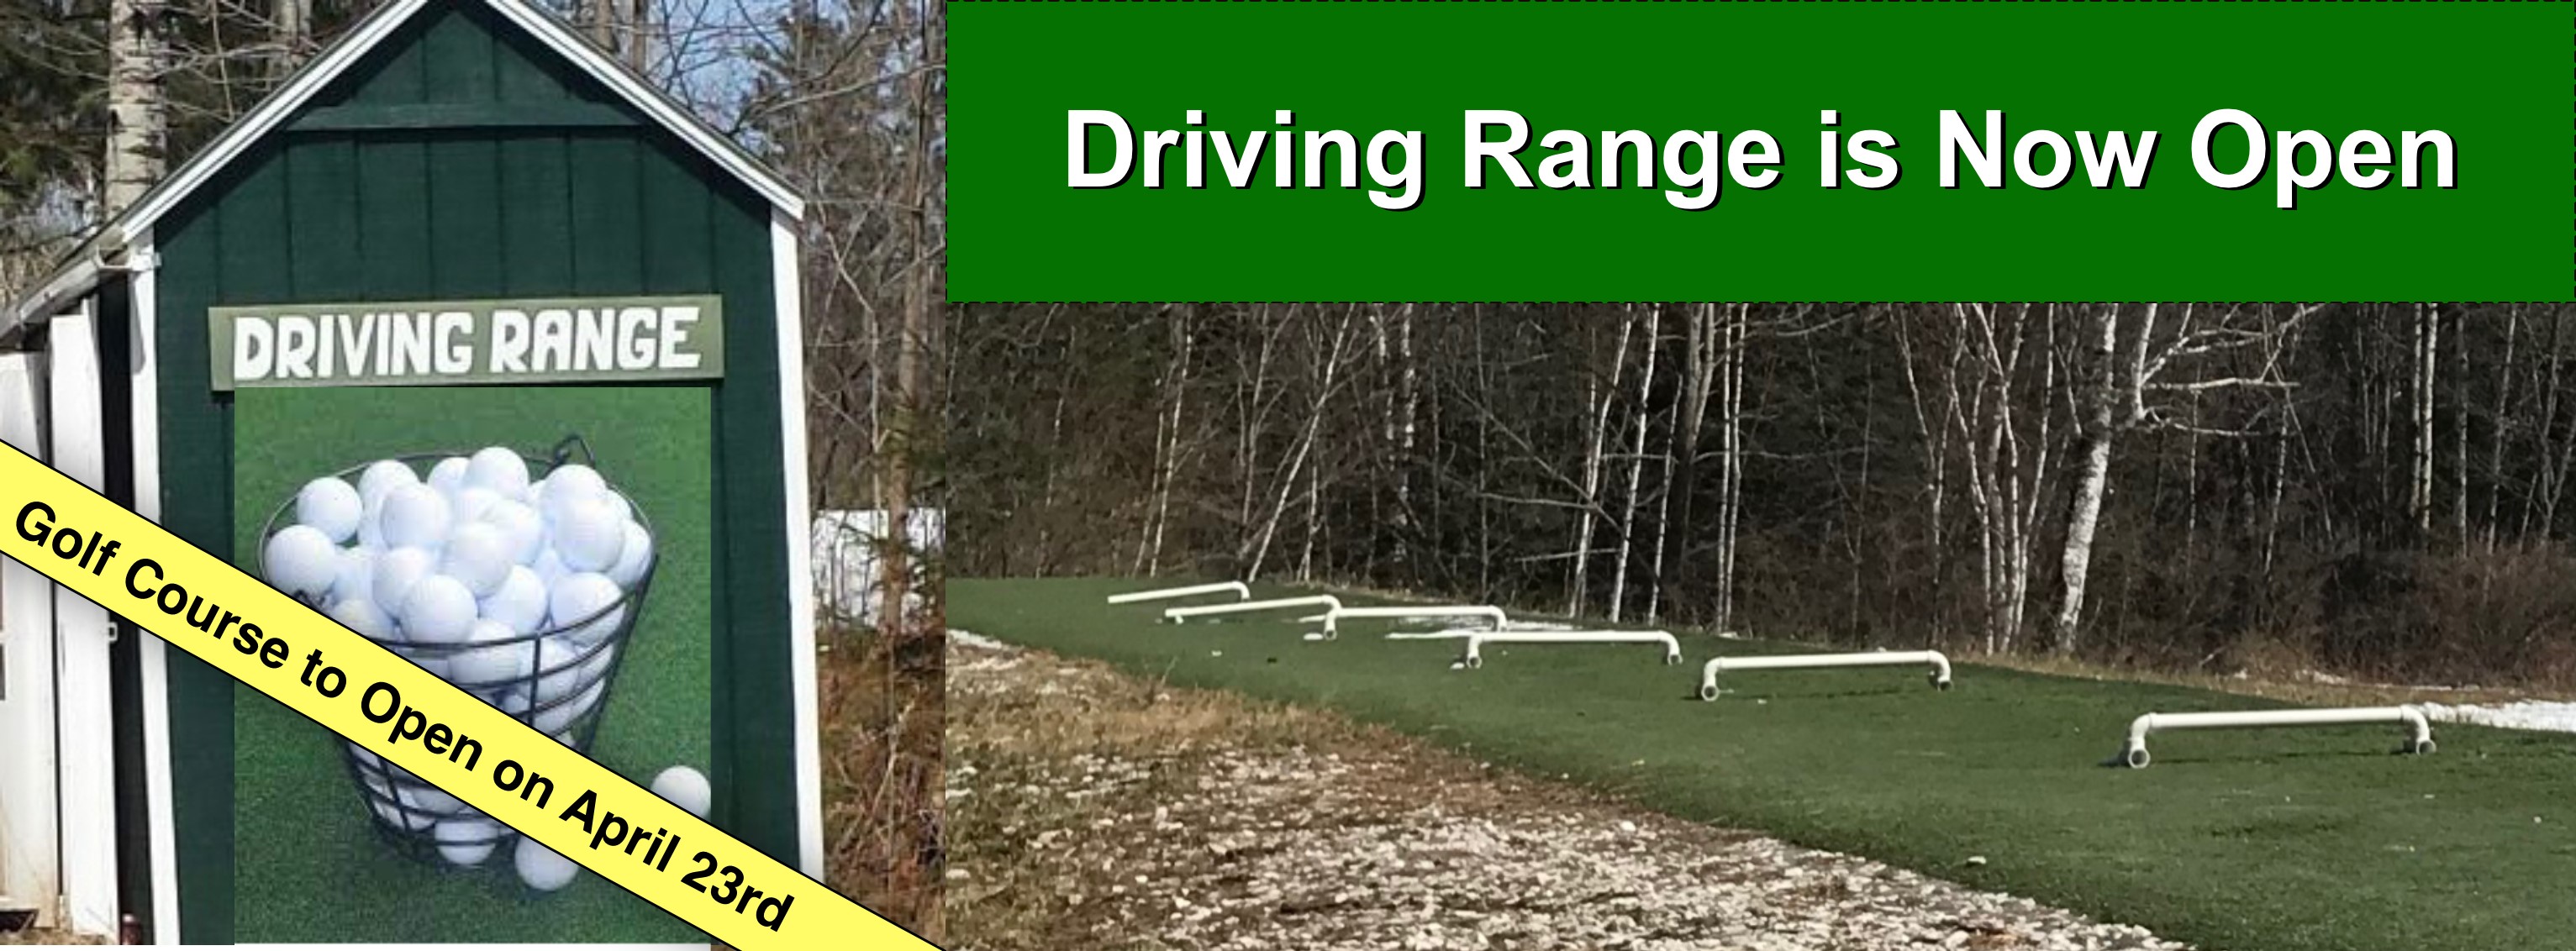 Driving Range Open